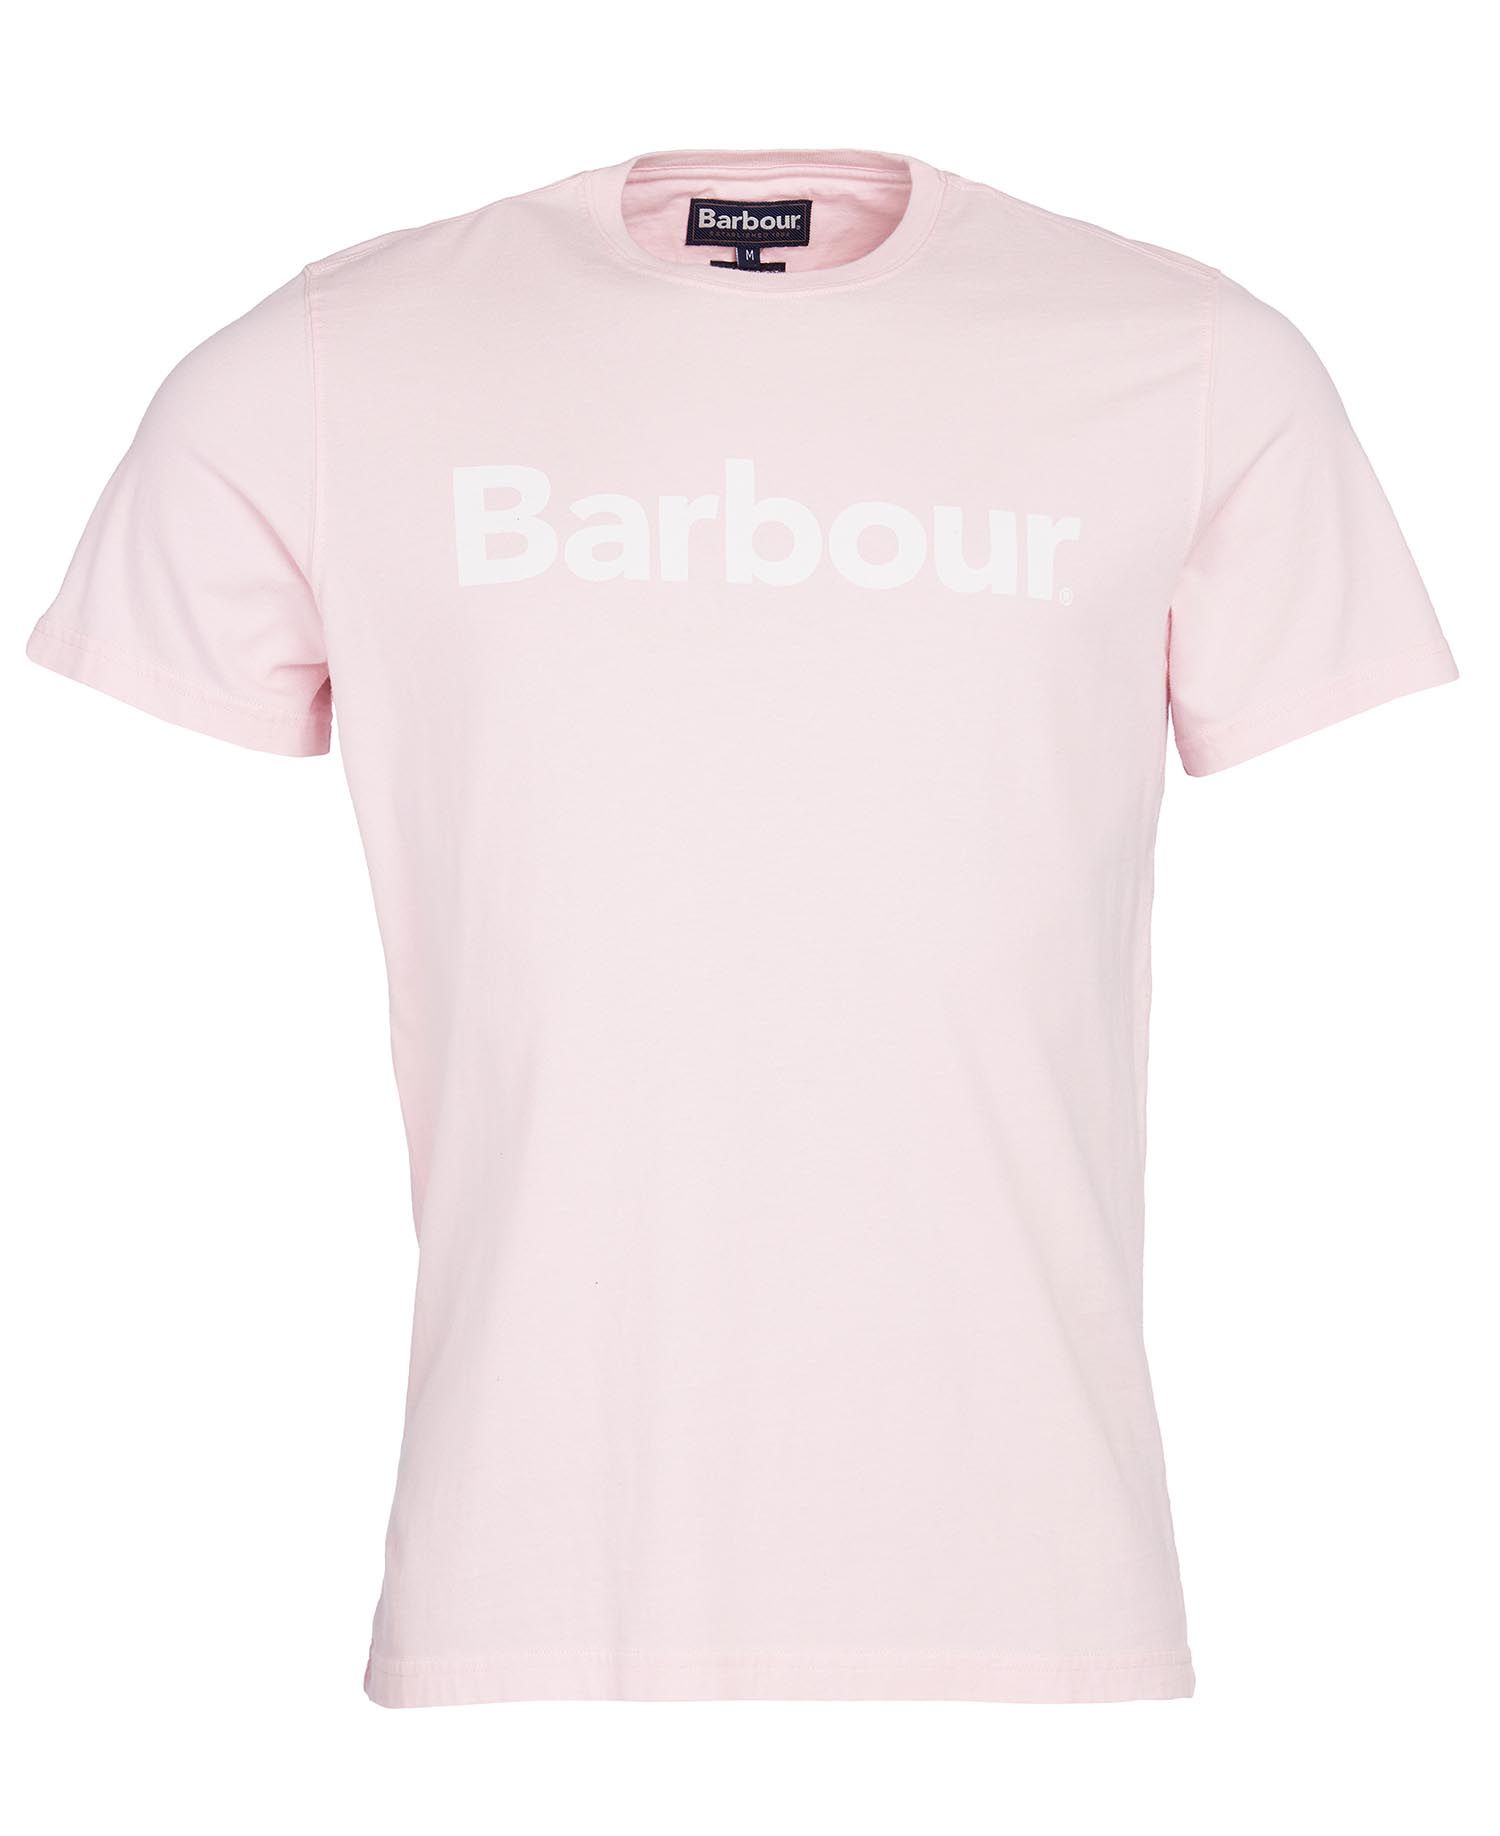 Barbour Logo Tee Pink